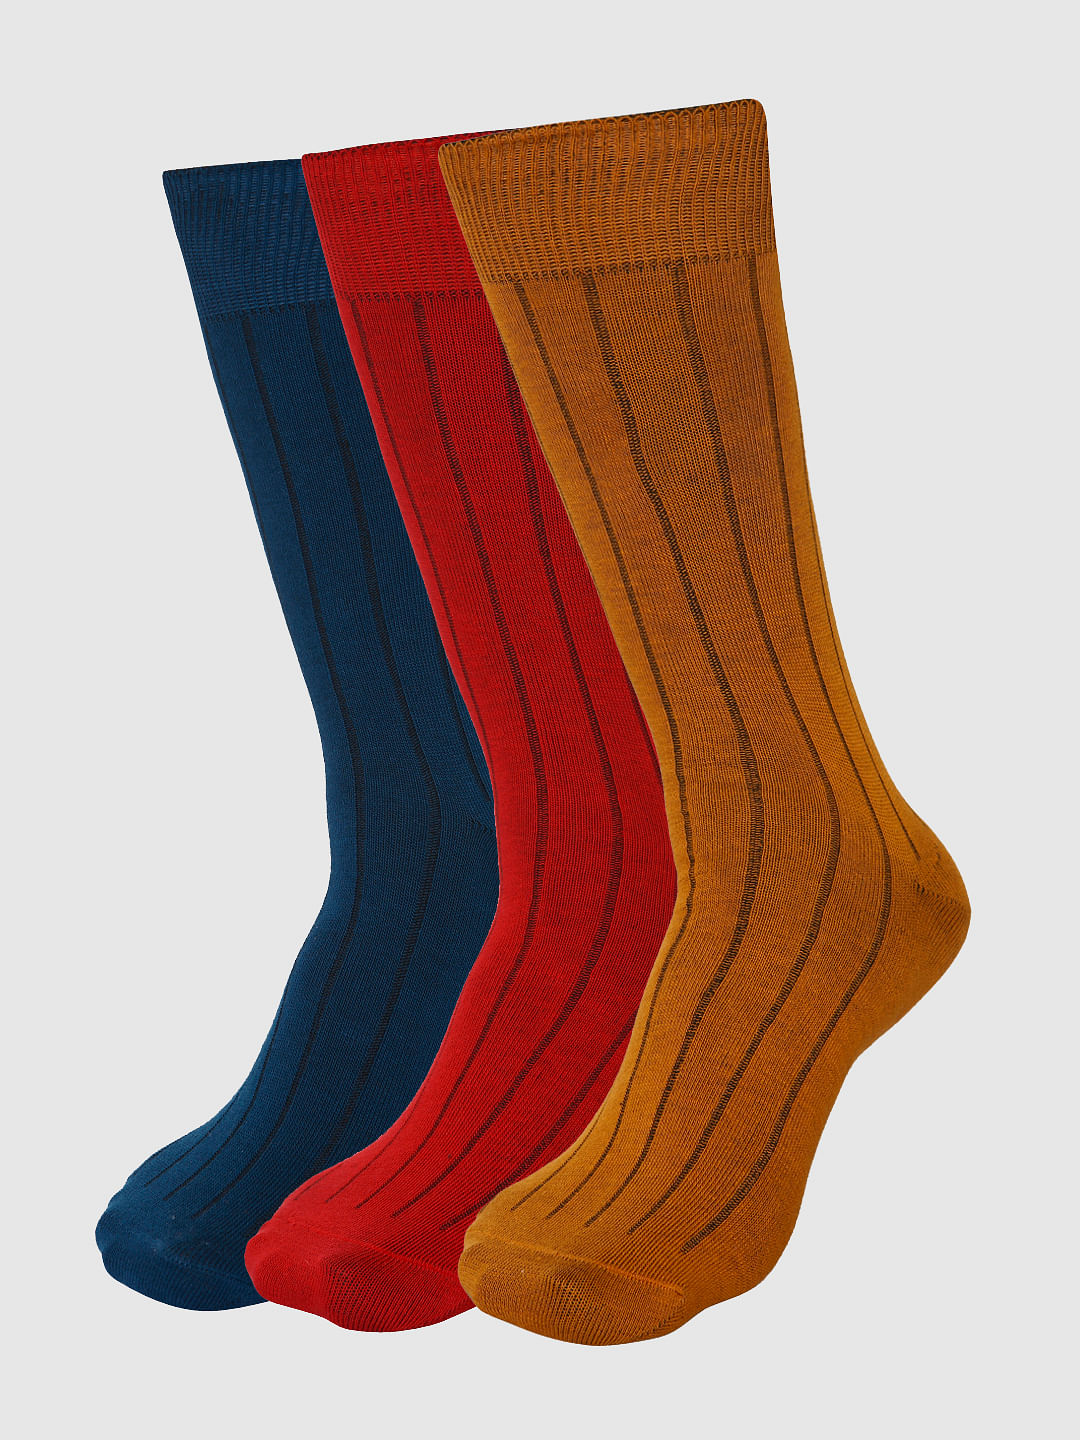 mid calf length socks